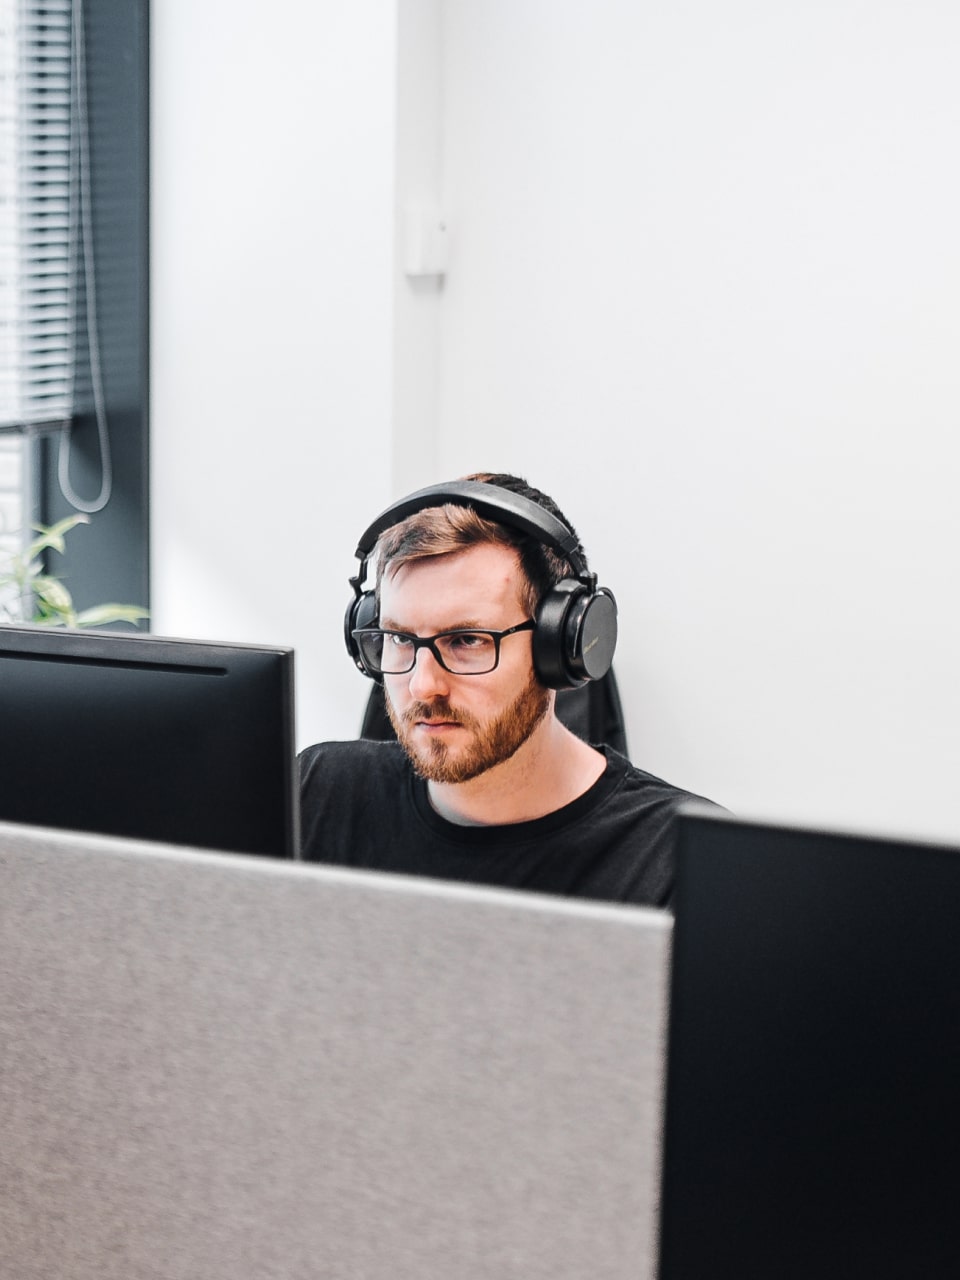 Software Engineer focusing with headphones